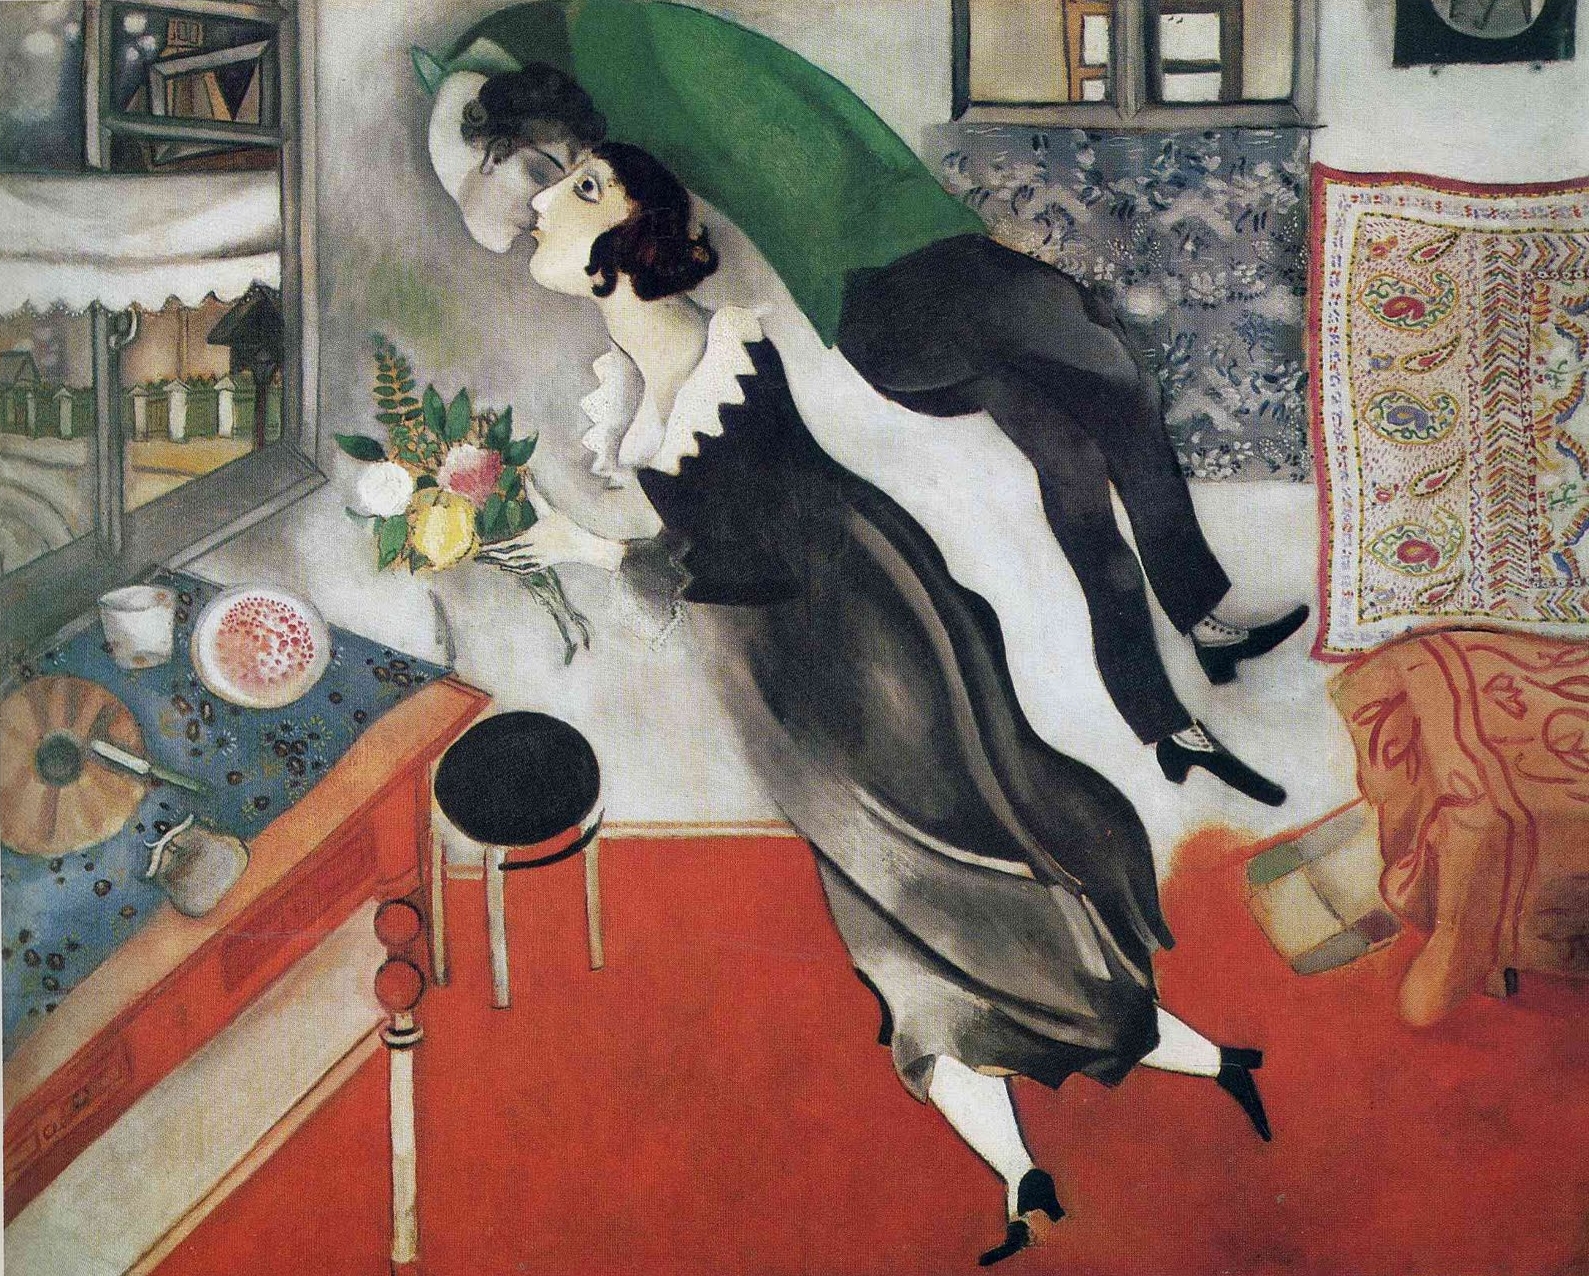 Marc+Chagall-1887-1985 (208).jpg